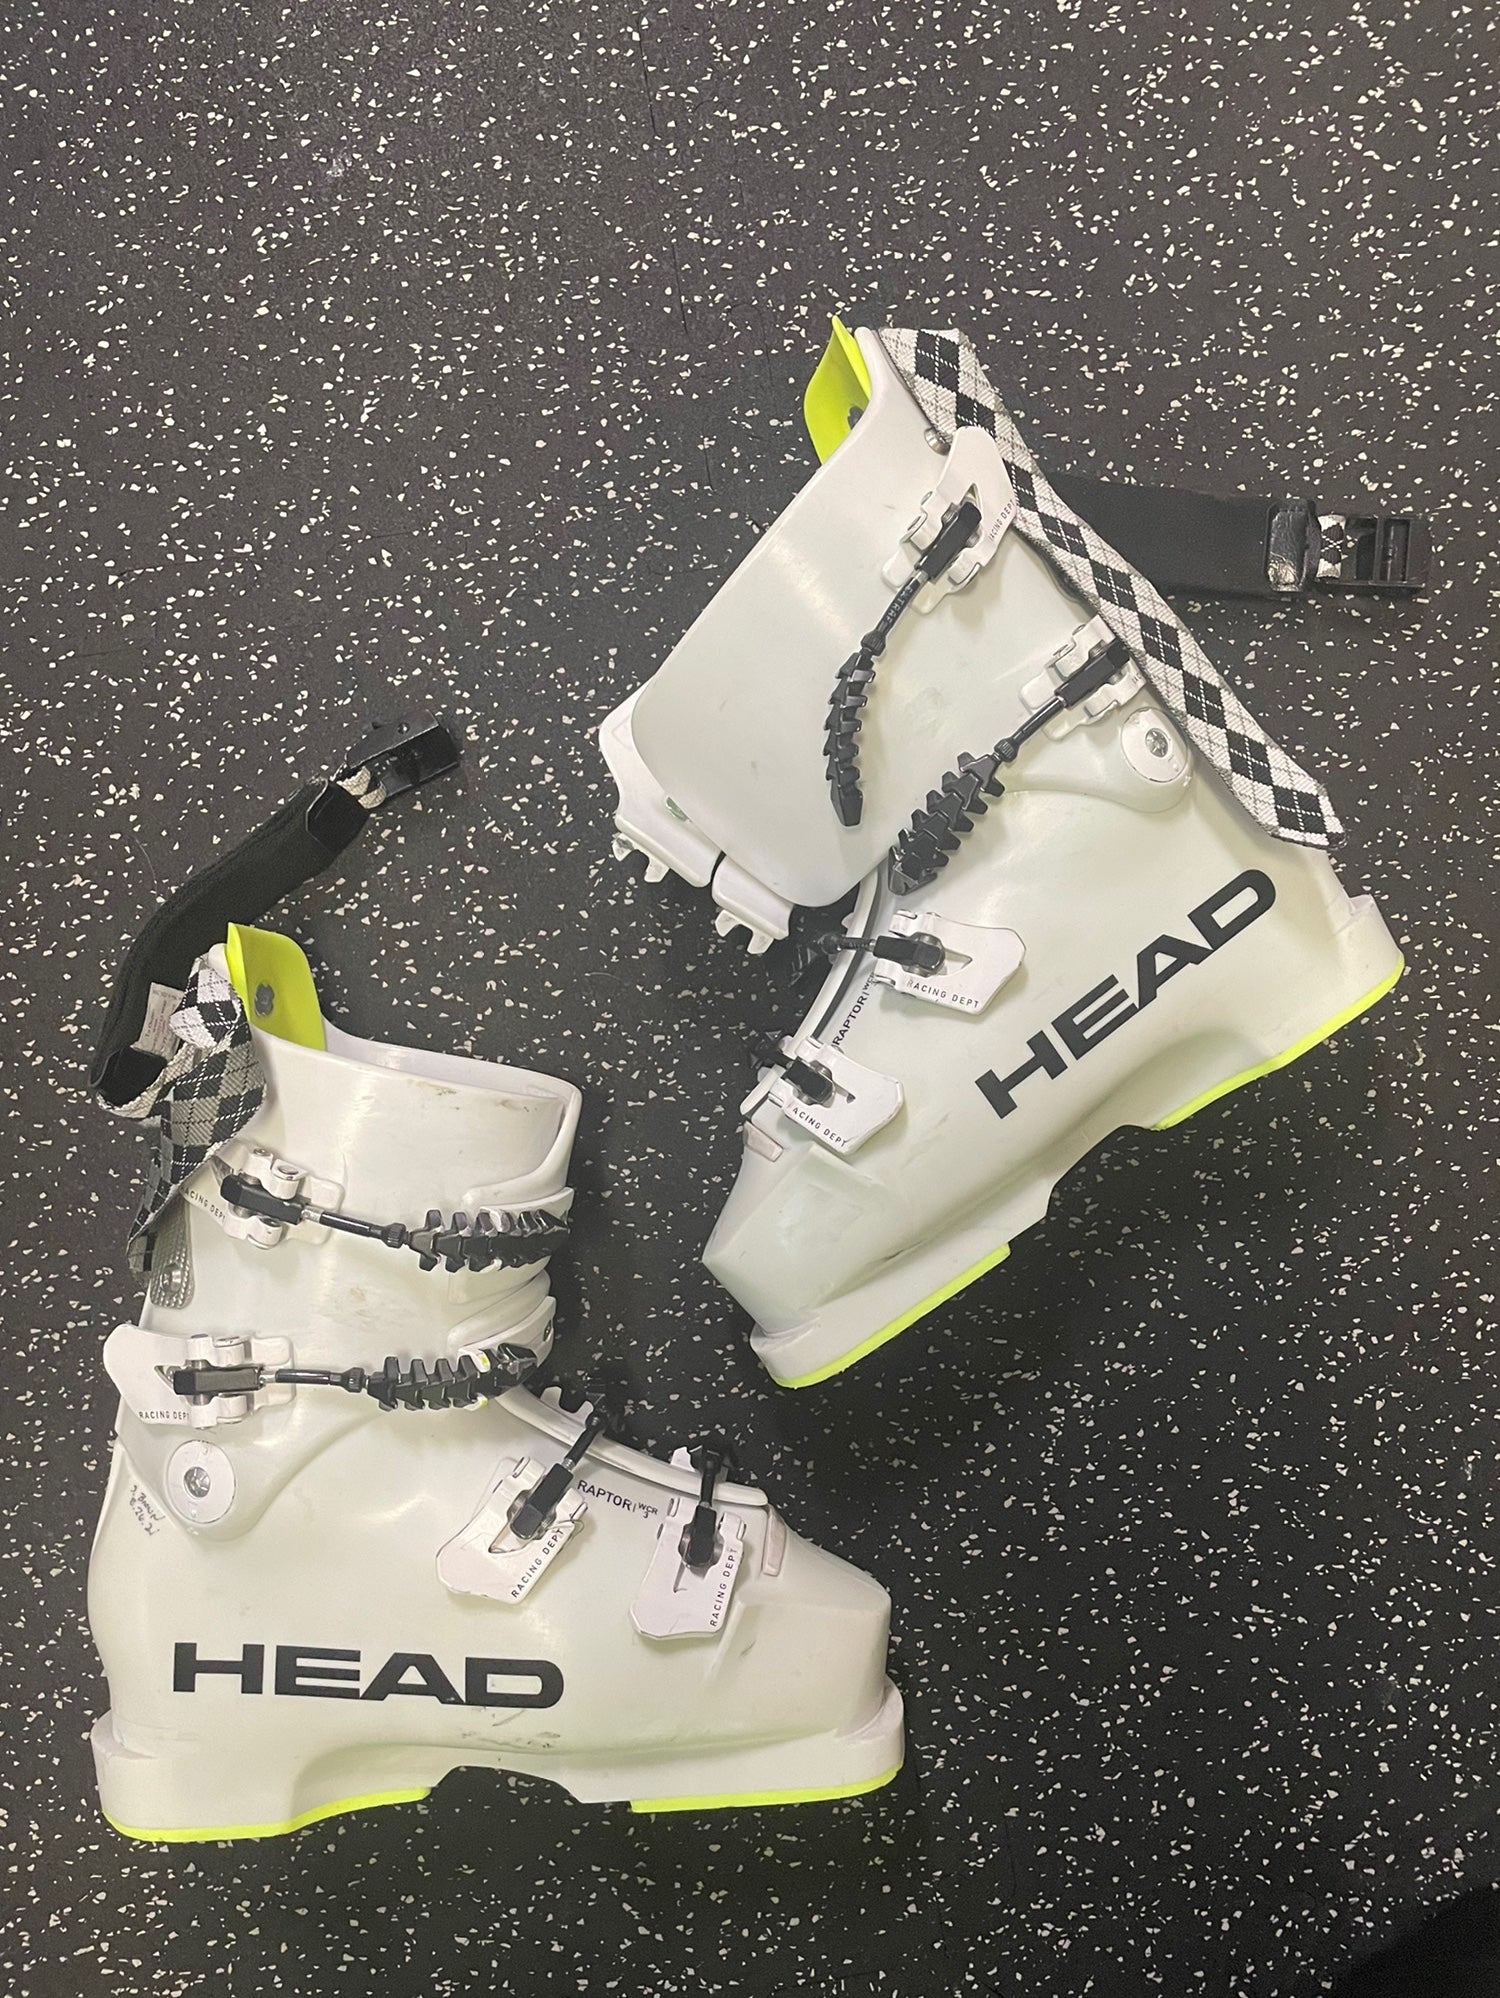 Mondo 25.5 Used Head BYS Adult Ski Boots Size 7.5 